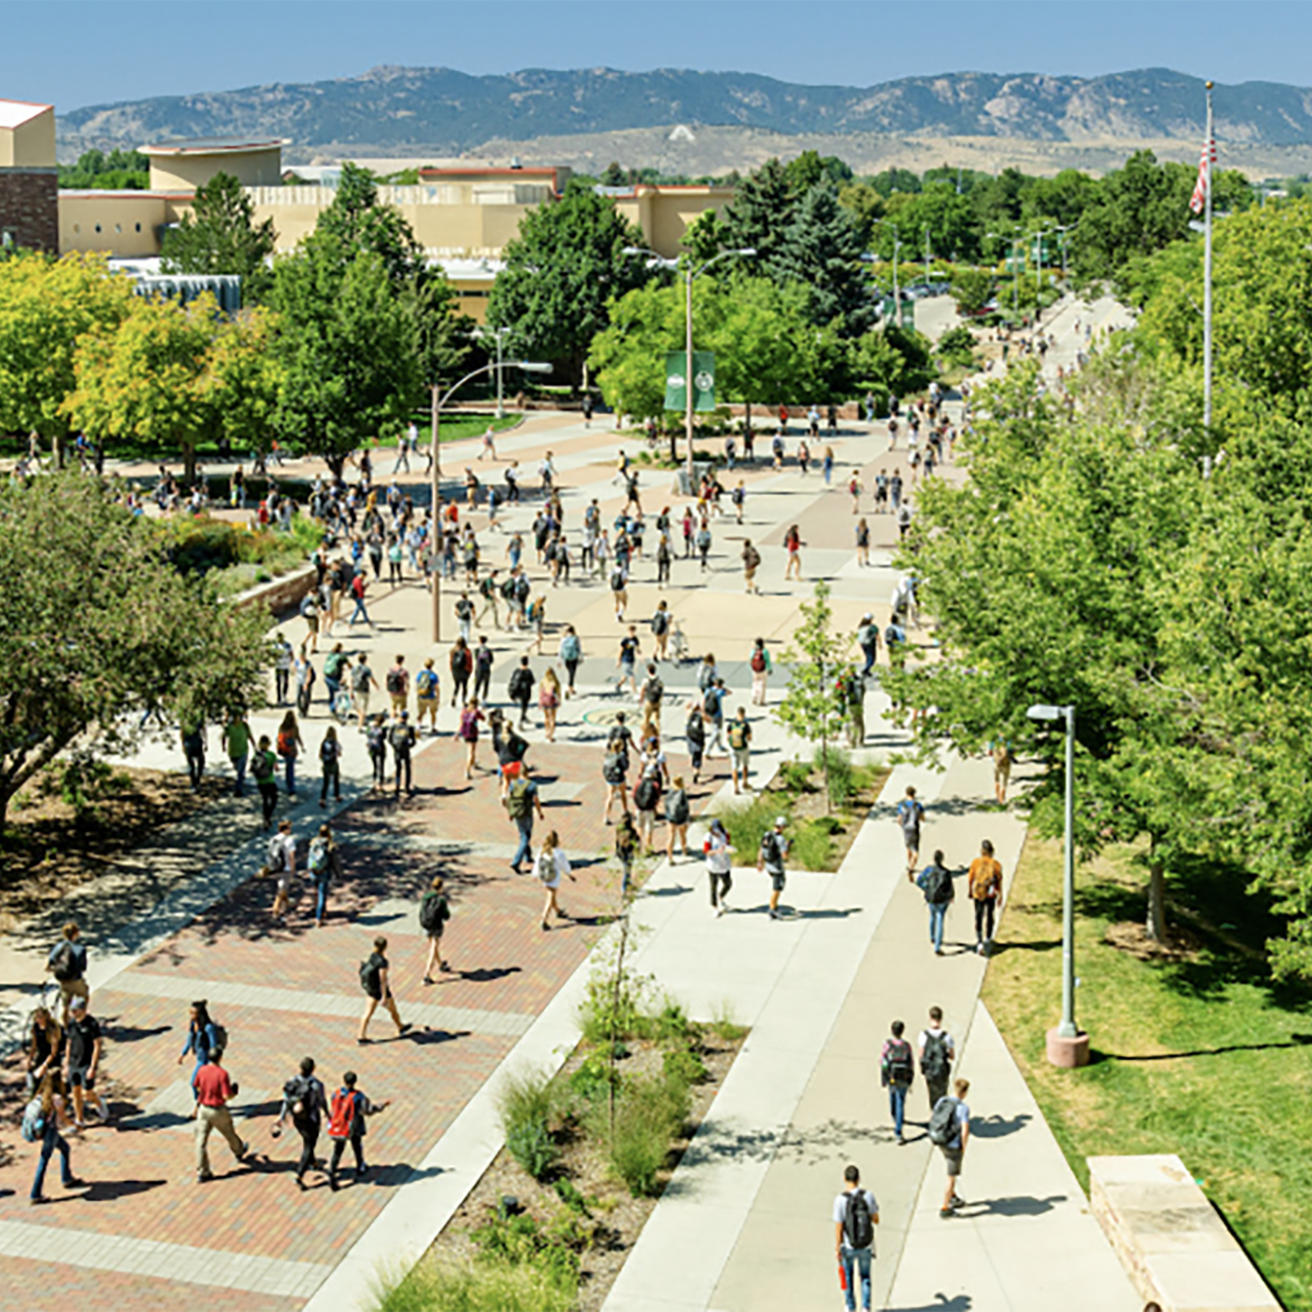 Colorado State University campus